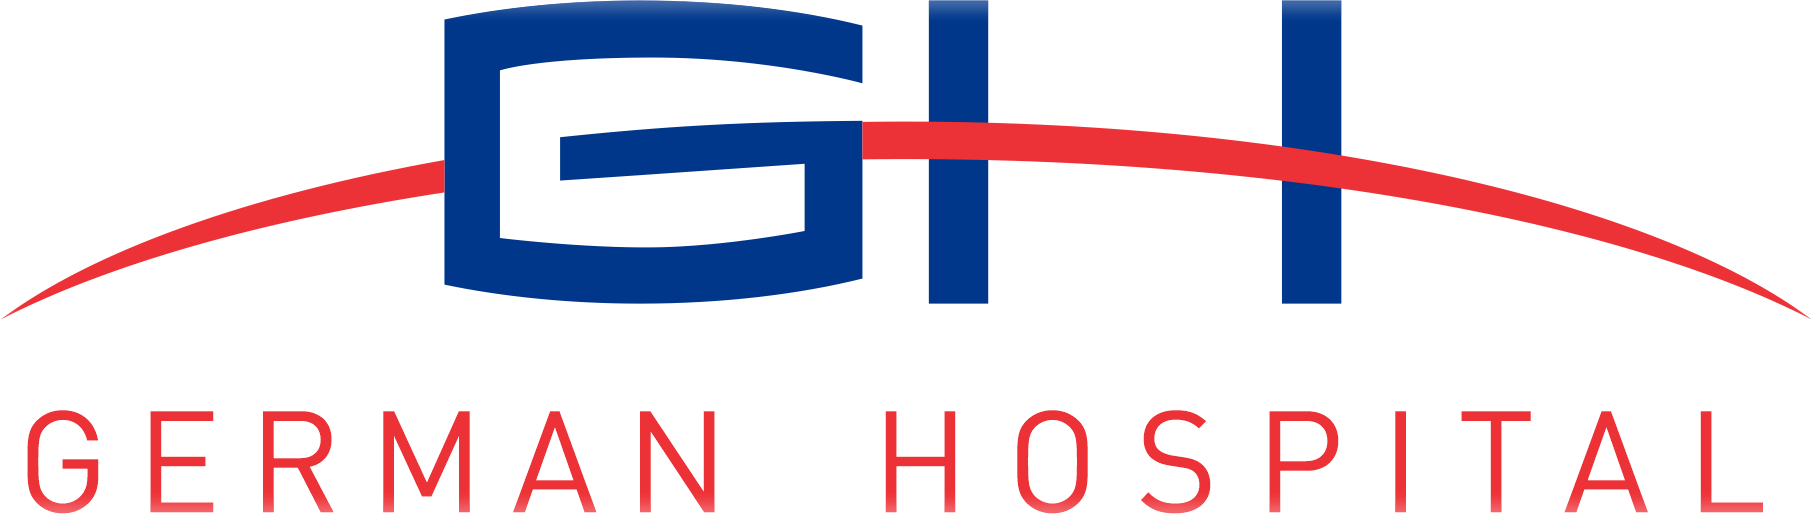 german hosbital logo